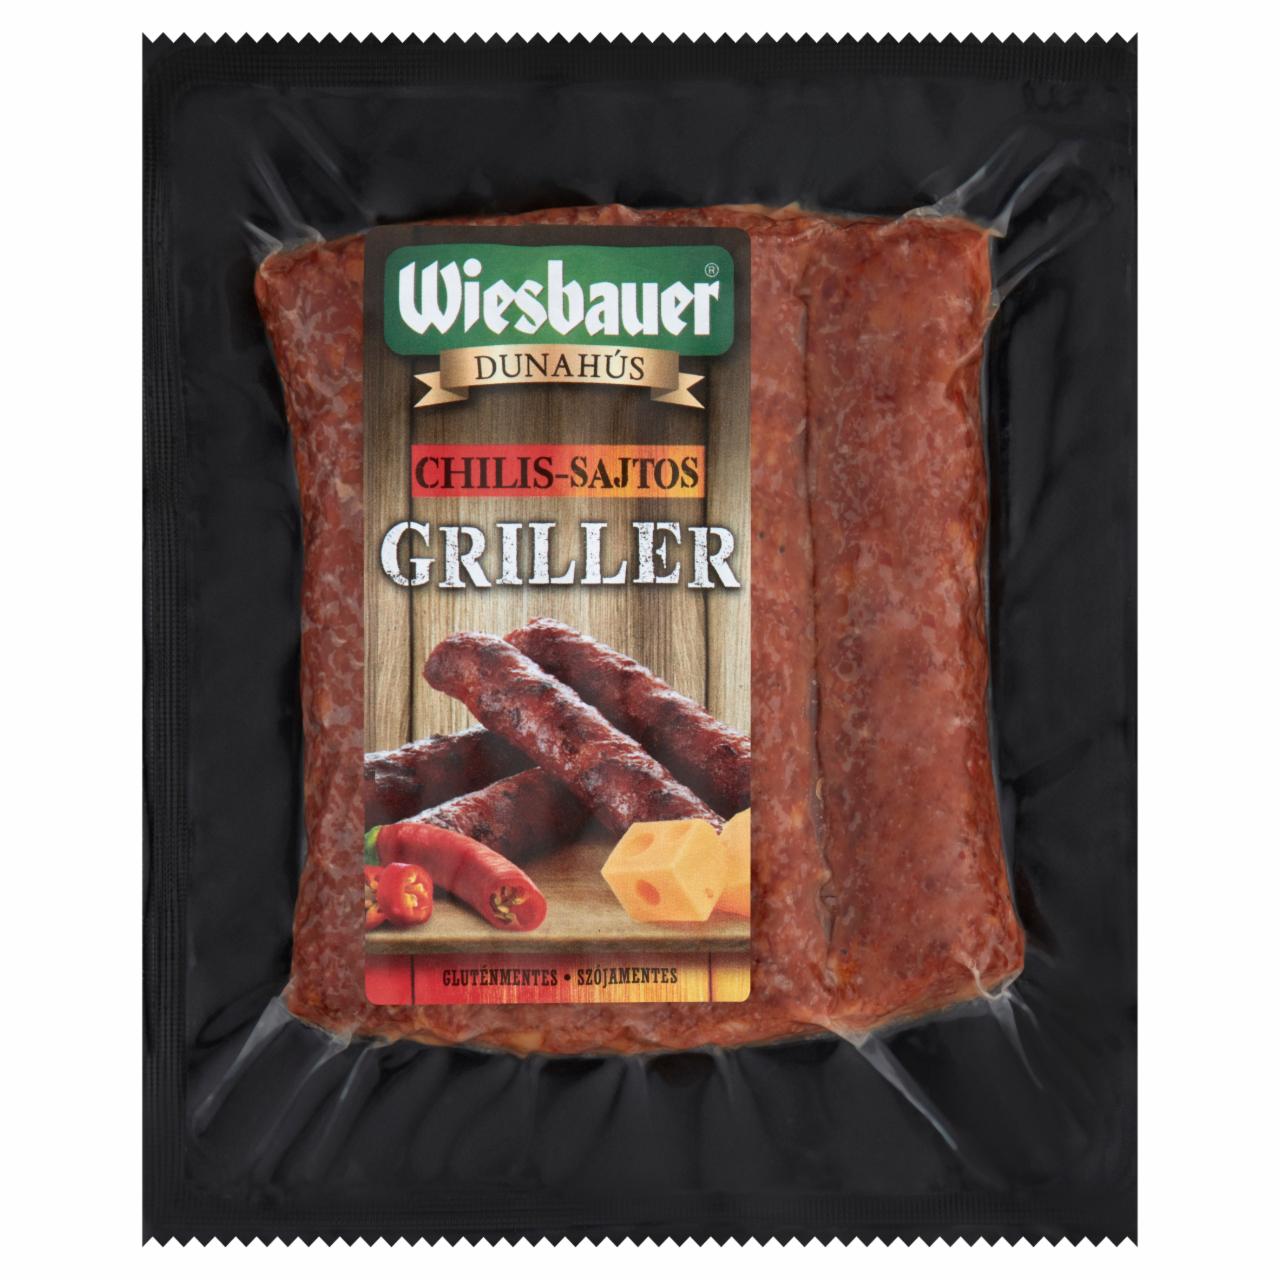 Képek - Wiesbauer chilis-sajtos griller 200 g